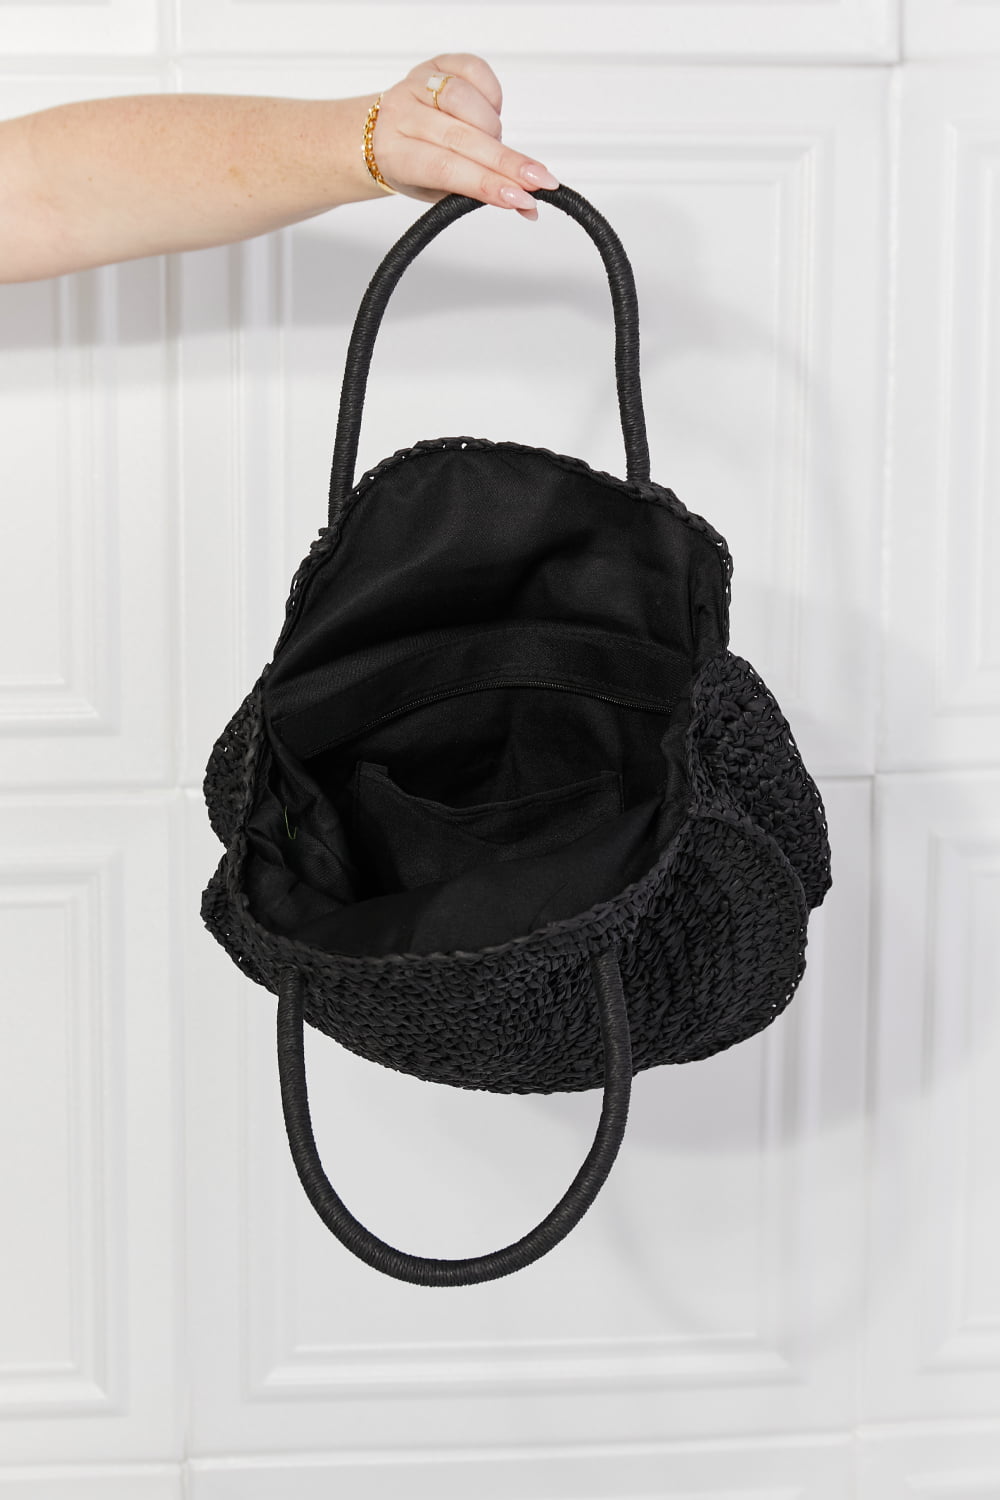 Justin Taylor Beach Date Straw Rattan Handbag in Black - Online Only